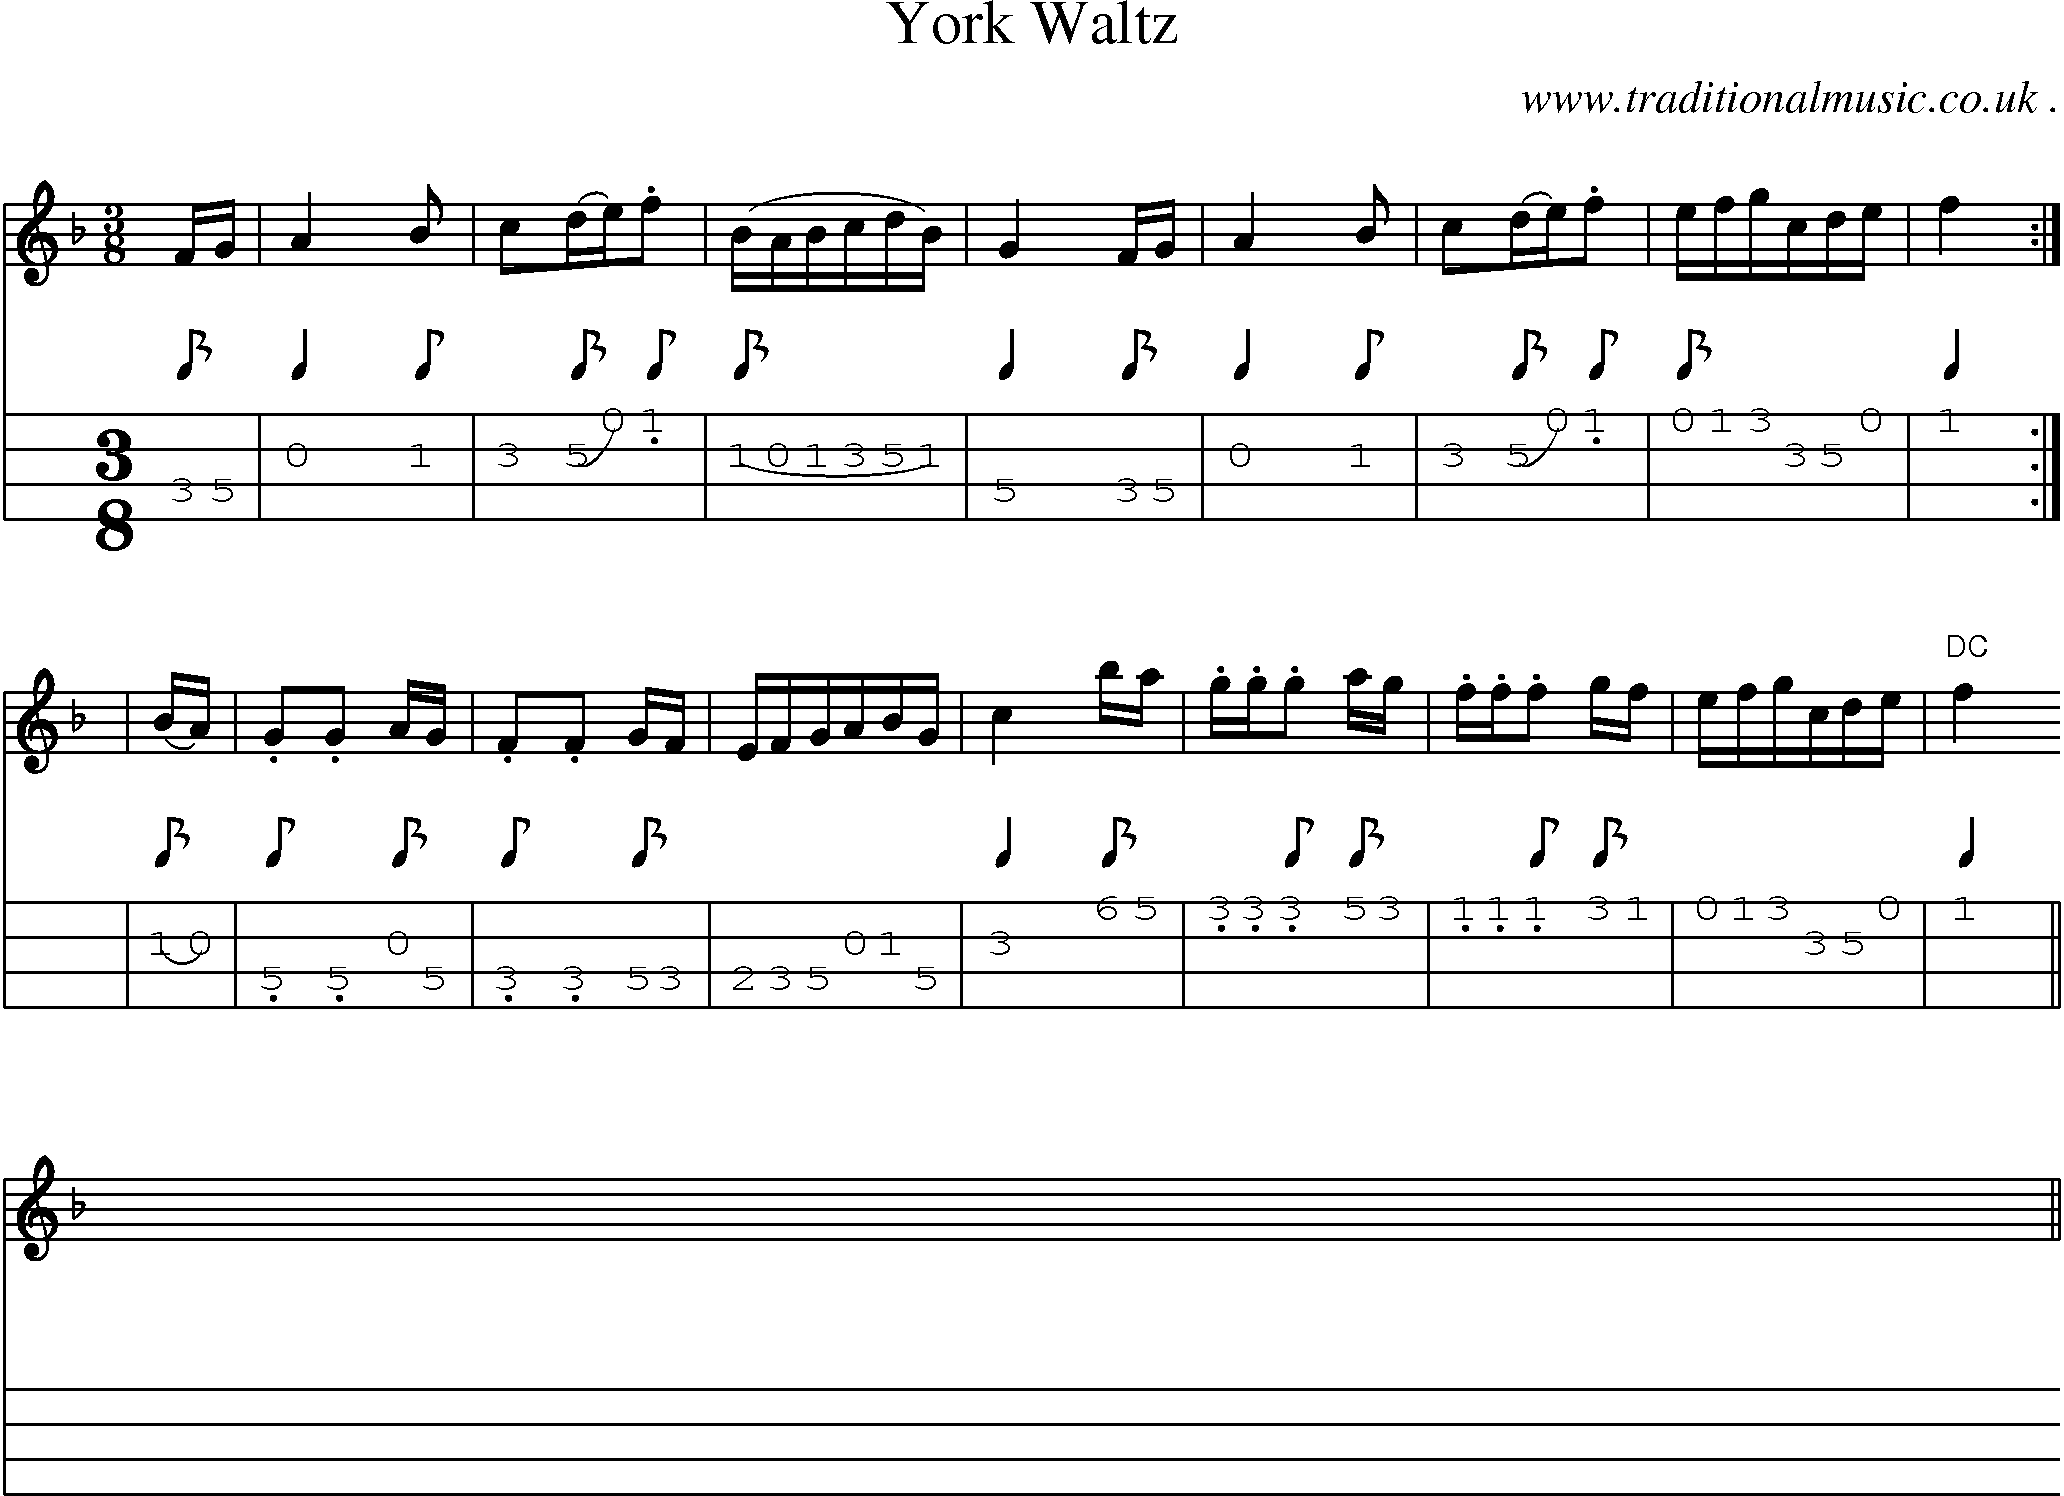 Sheet-Music and Mandolin Tabs for York Waltz